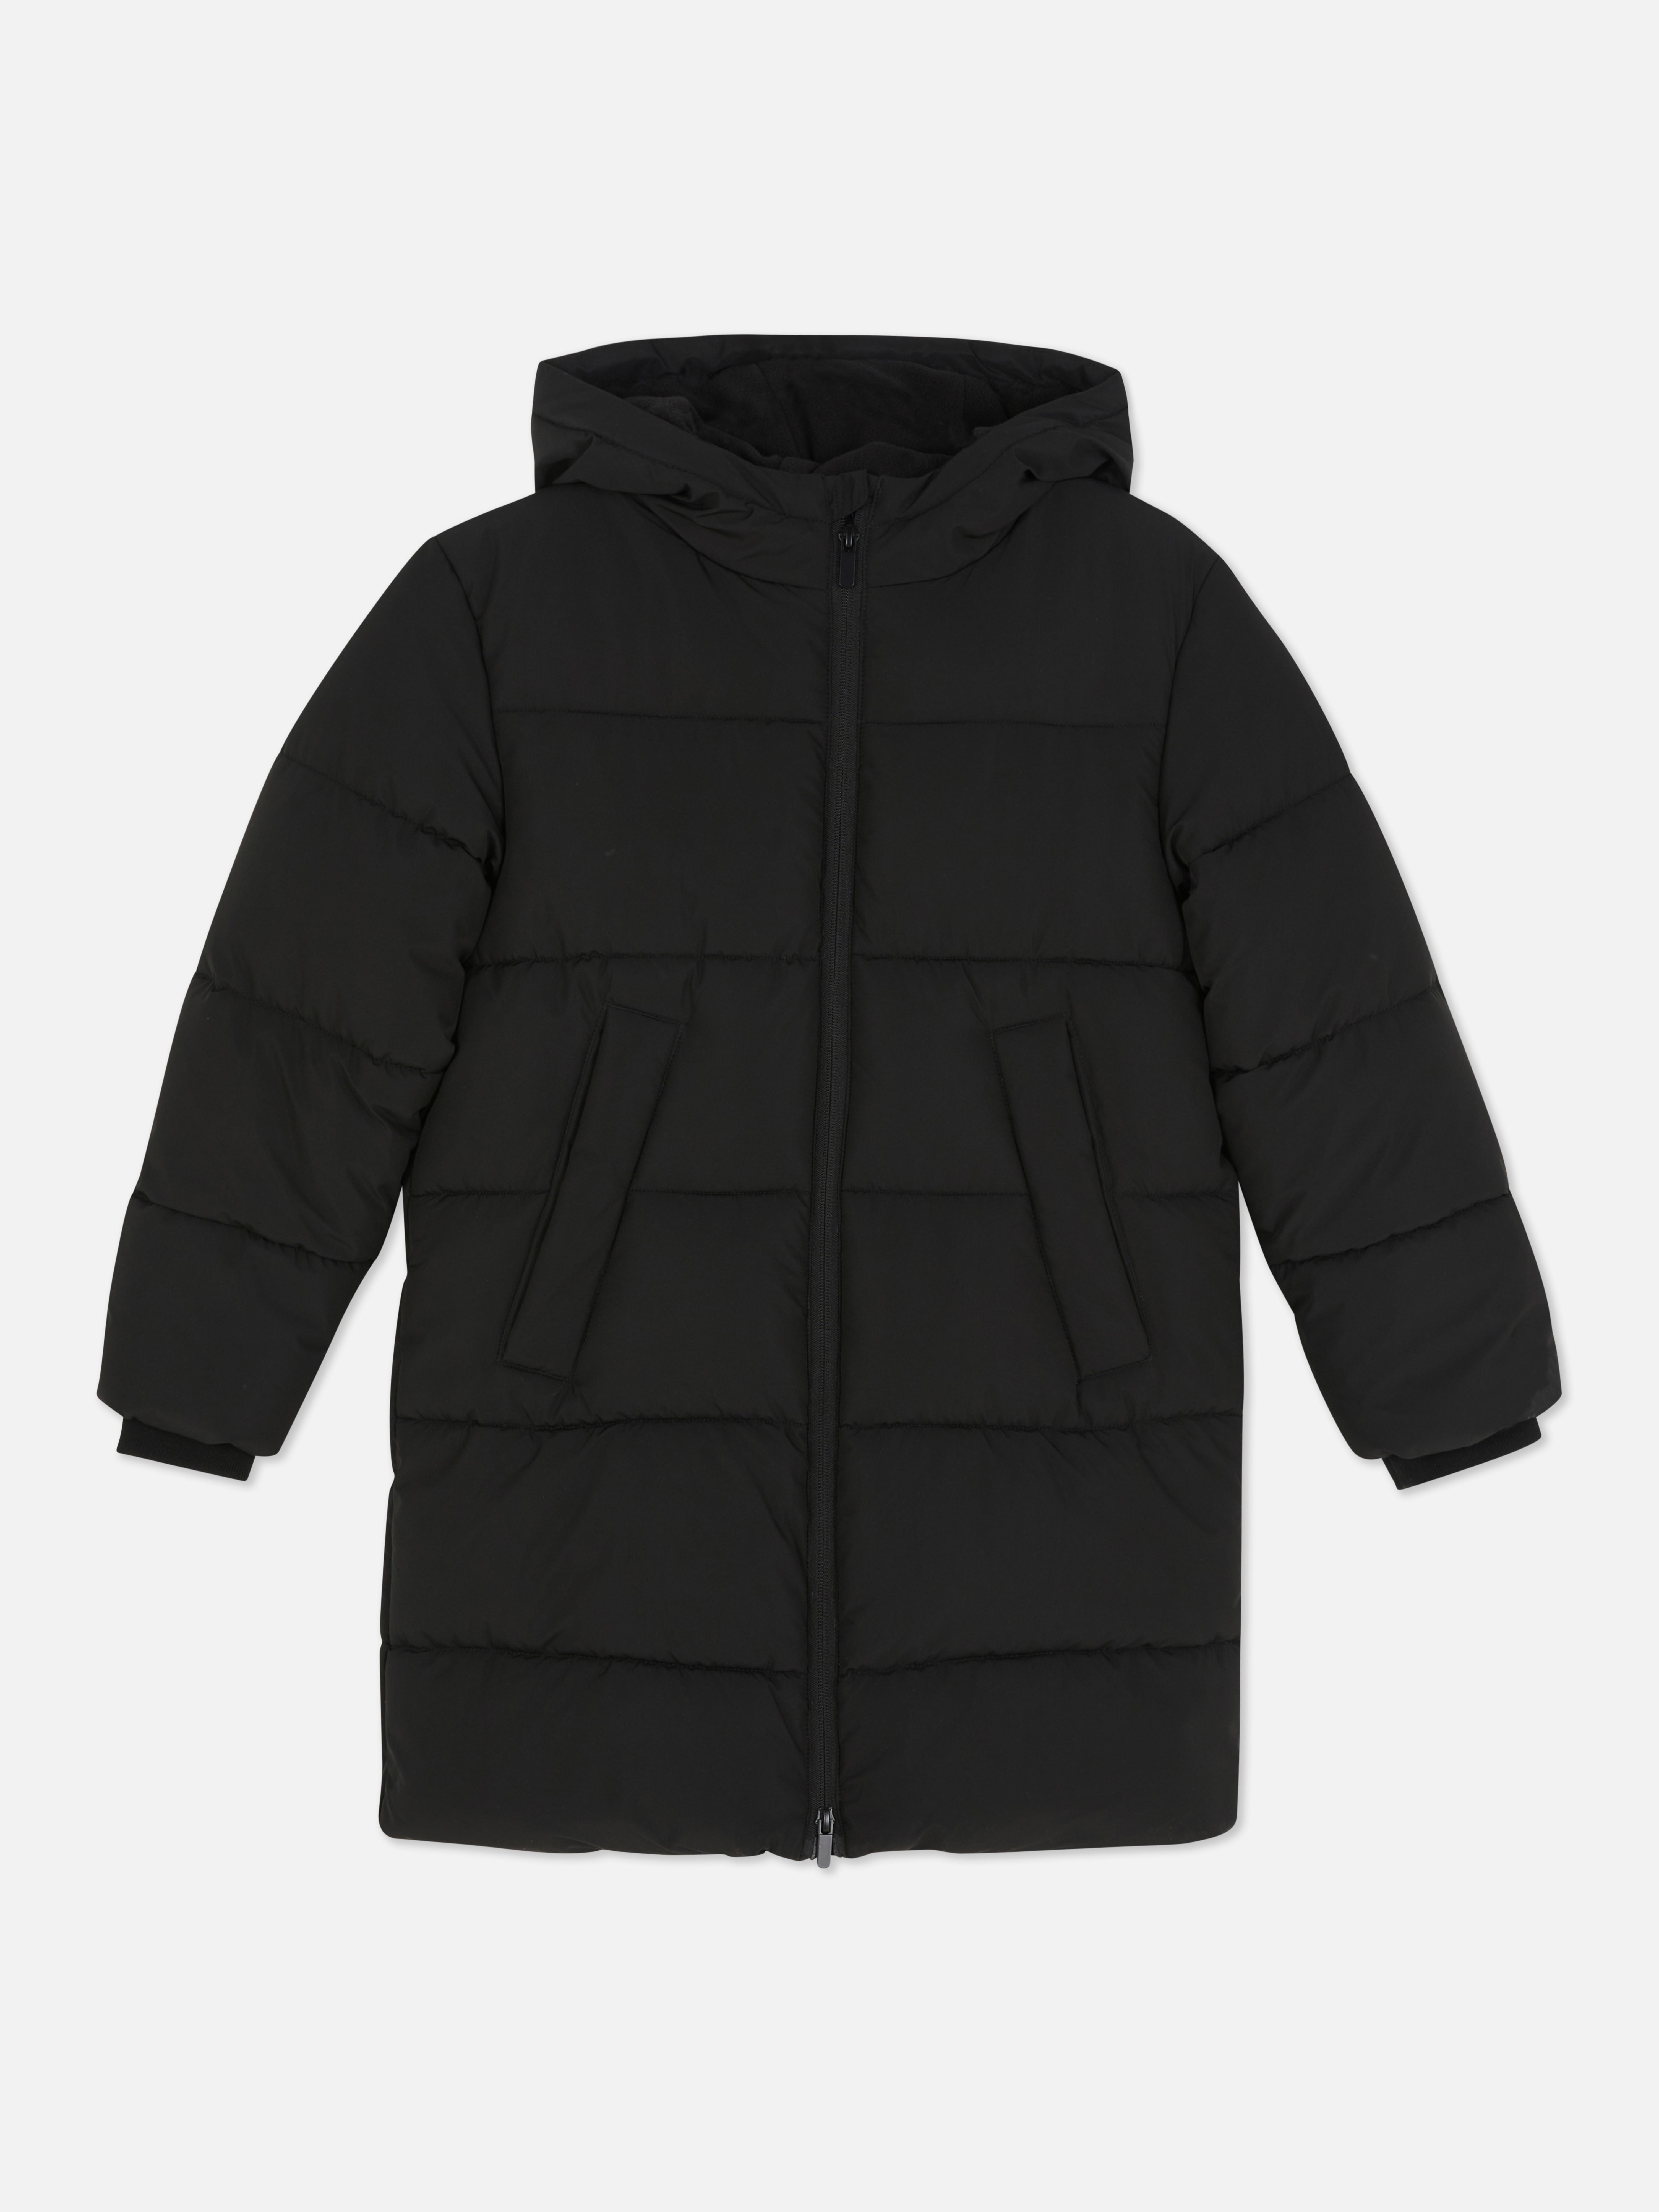 Hooded Puffer Coat | Older Boys Coats & Jackets | Older Boys' Clothes ...